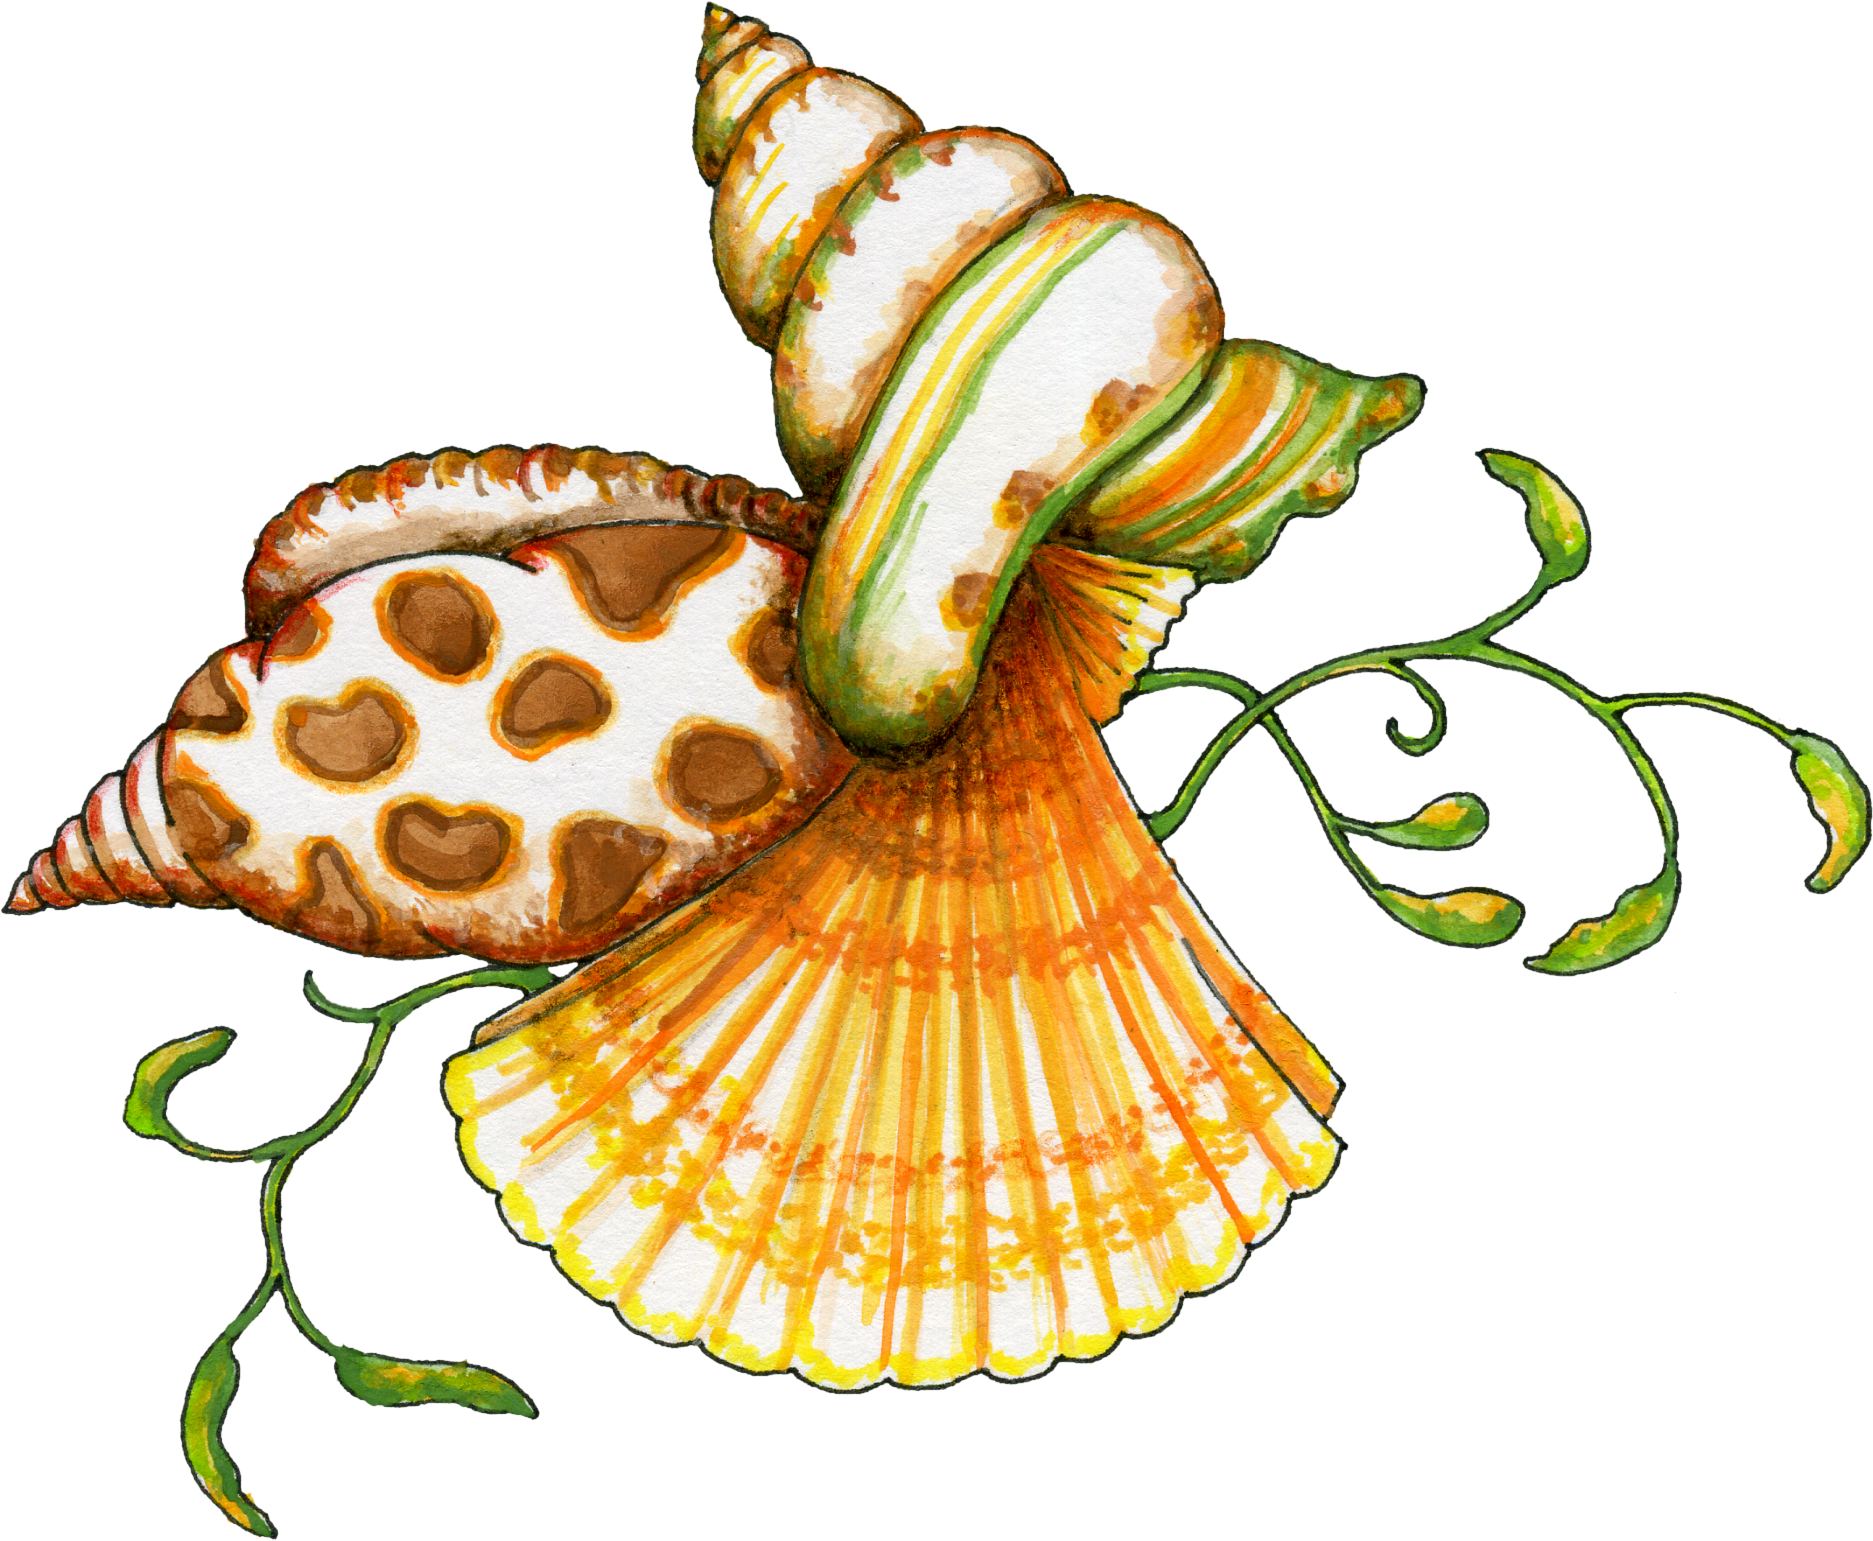 Free Seashells Cliparts, Download Free Seashells Cliparts png images